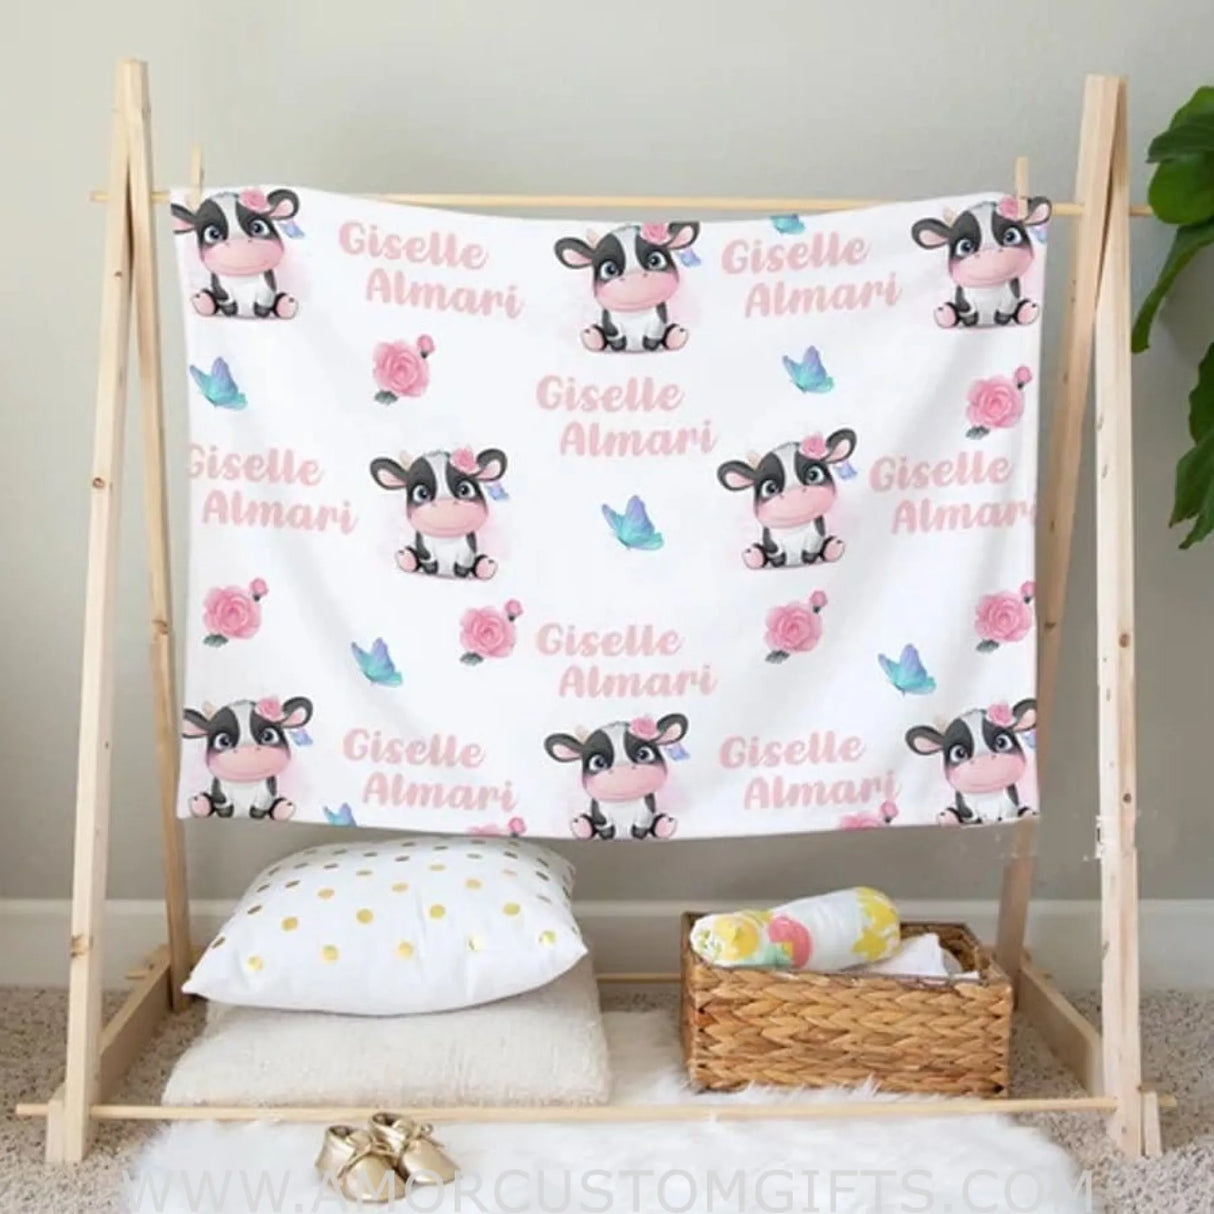 Blankets USA MADE Baby Cow Baby Blanket, Custom Design Baby Blanket, Baby Shower Gift Blanket, Name Baby Blanket